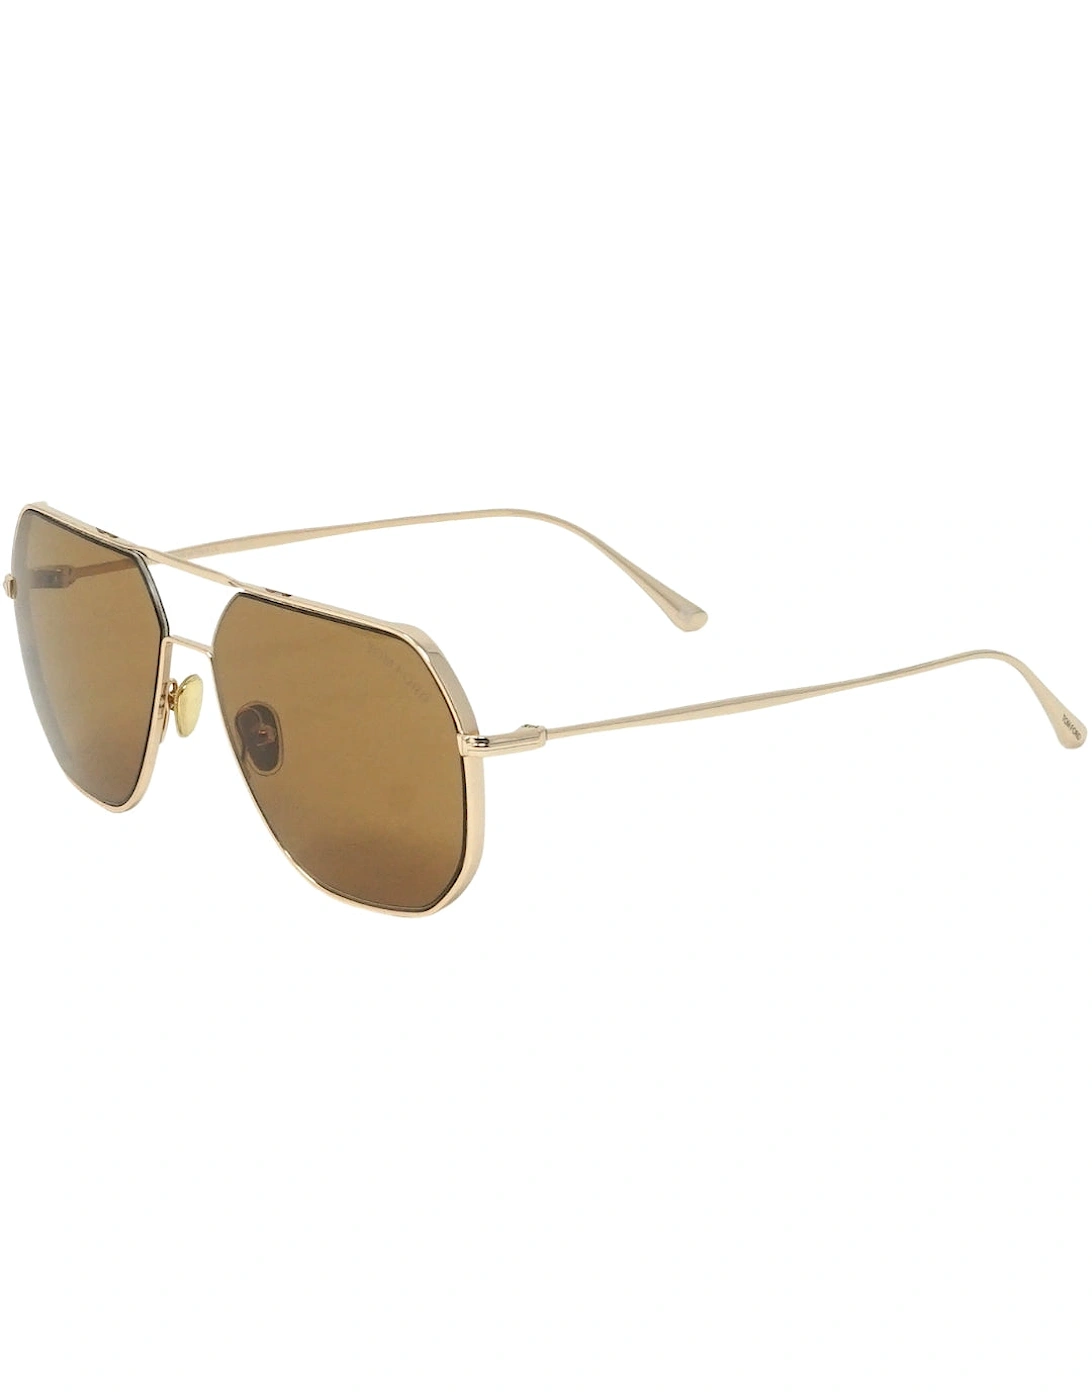 FT0852 28E Gilles-02 Rose Gold Sunglasses